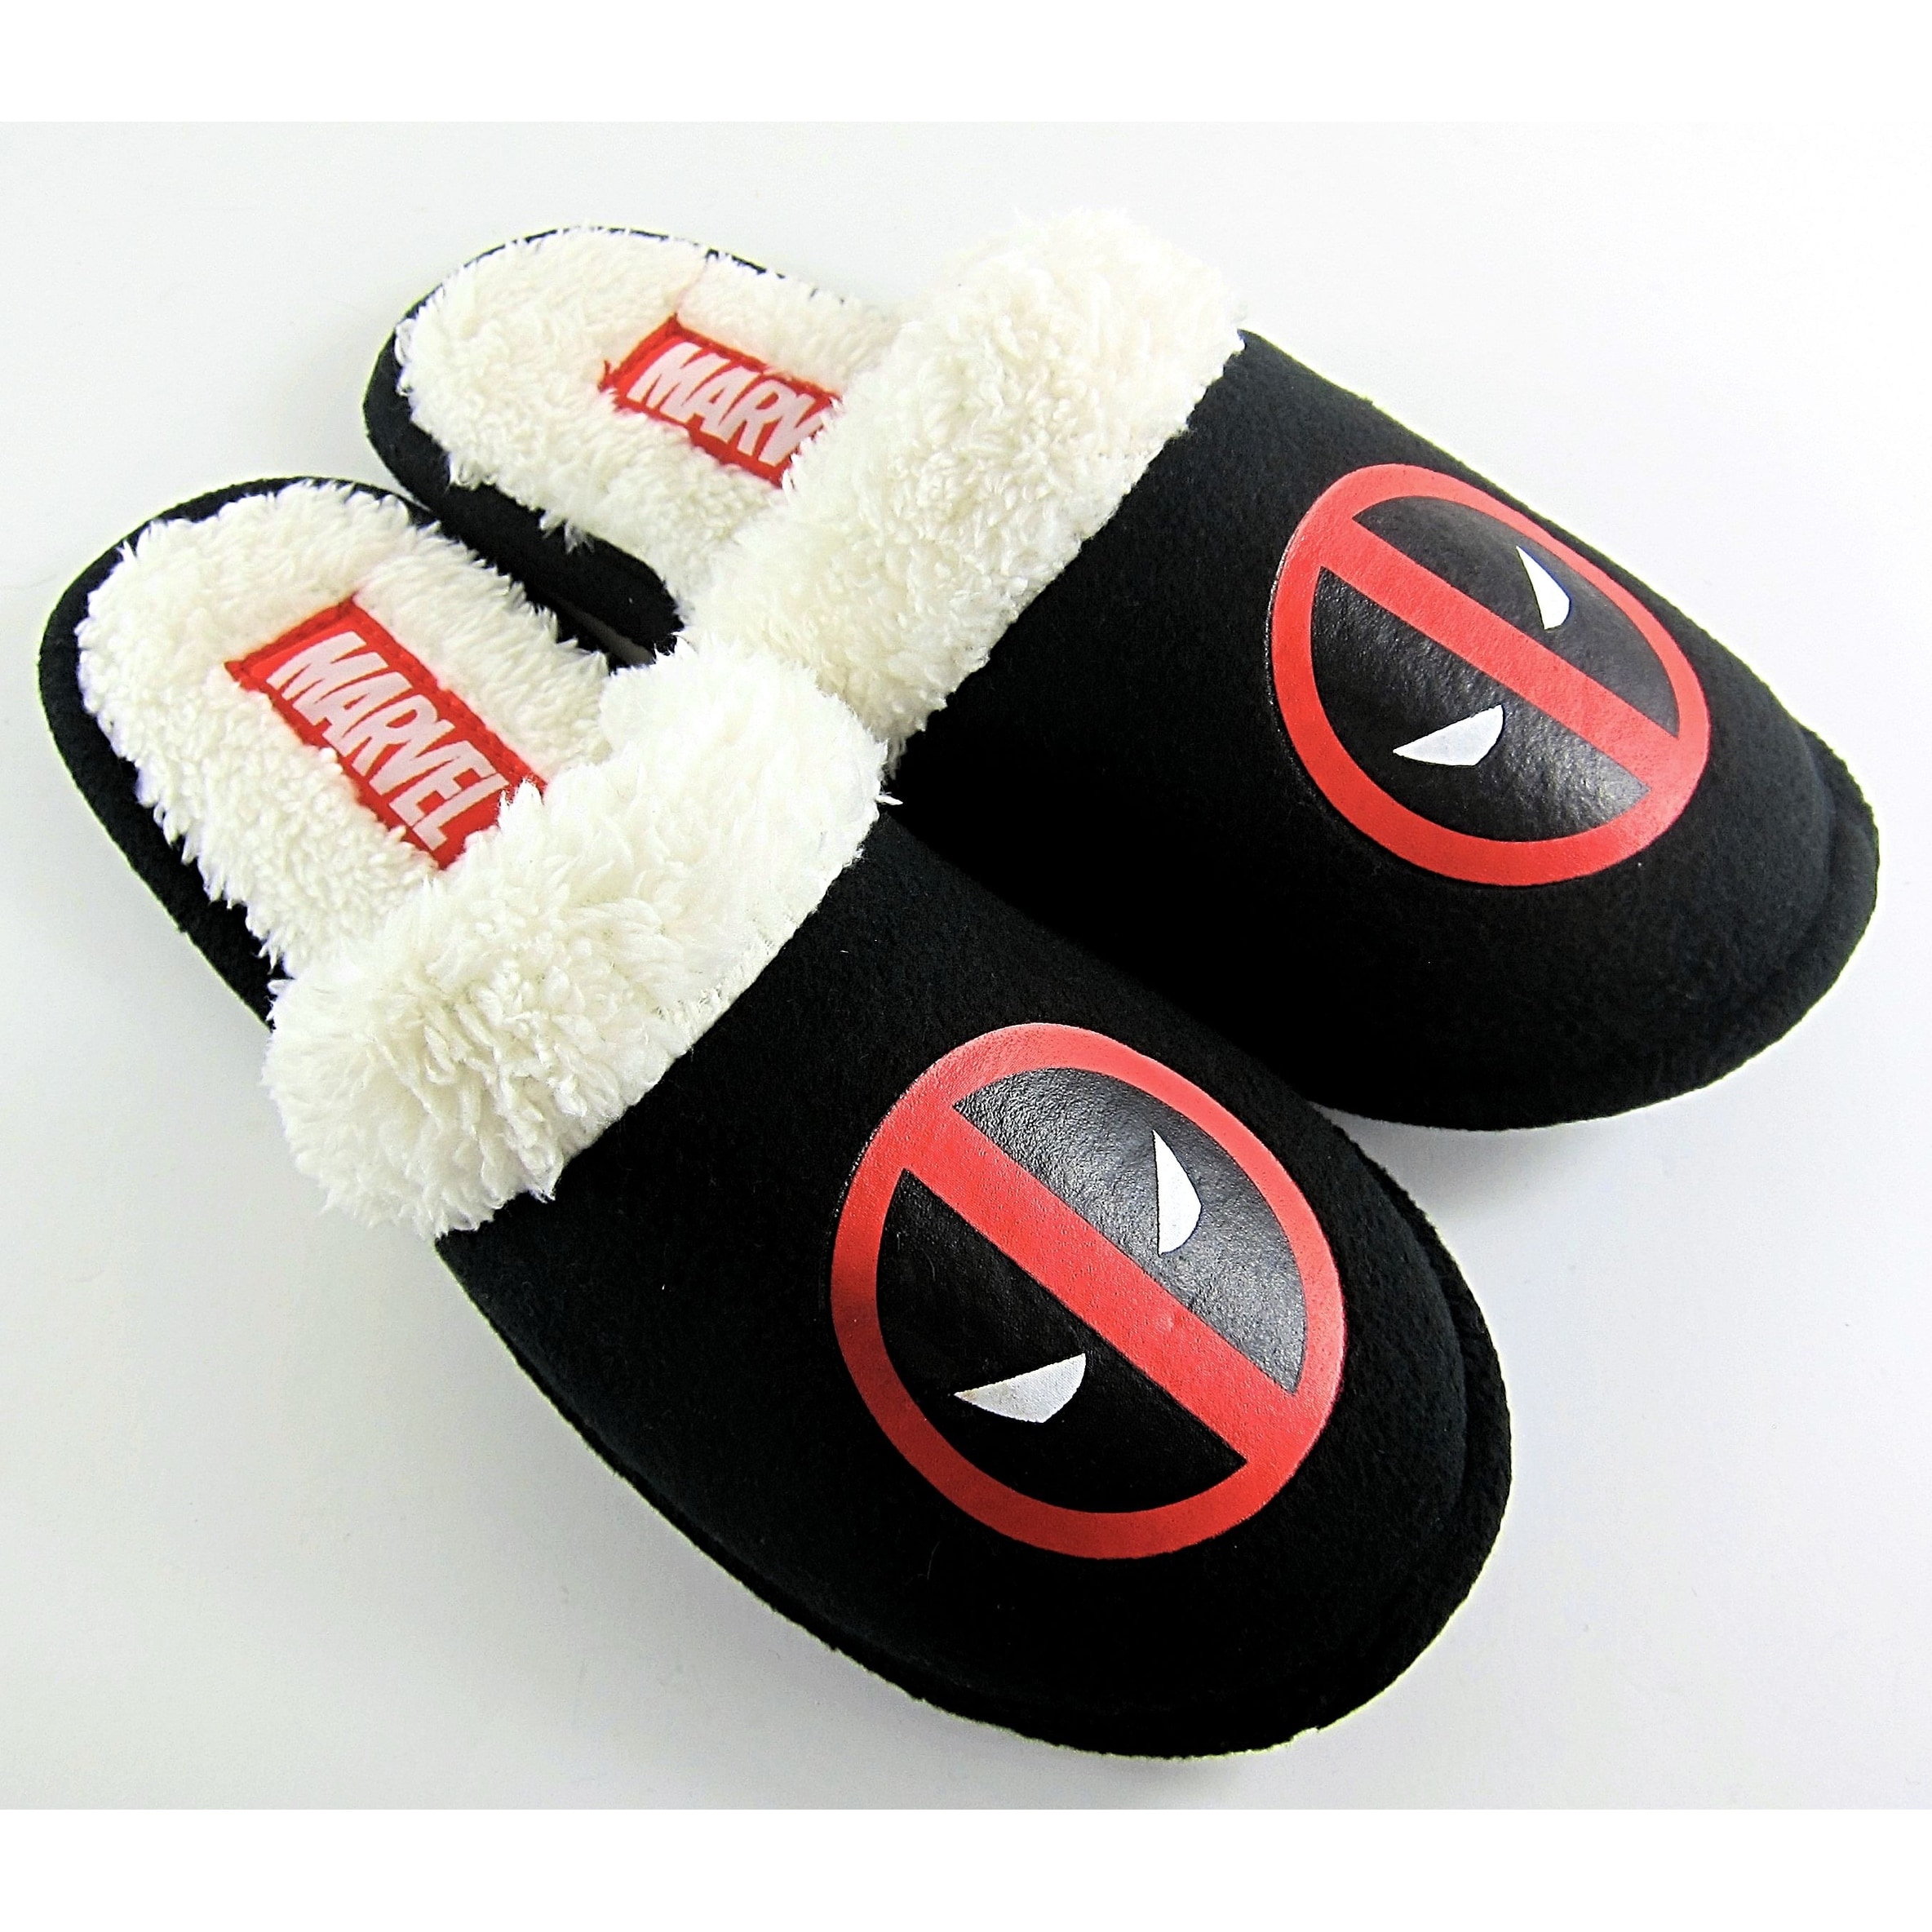 m & s mens slippers